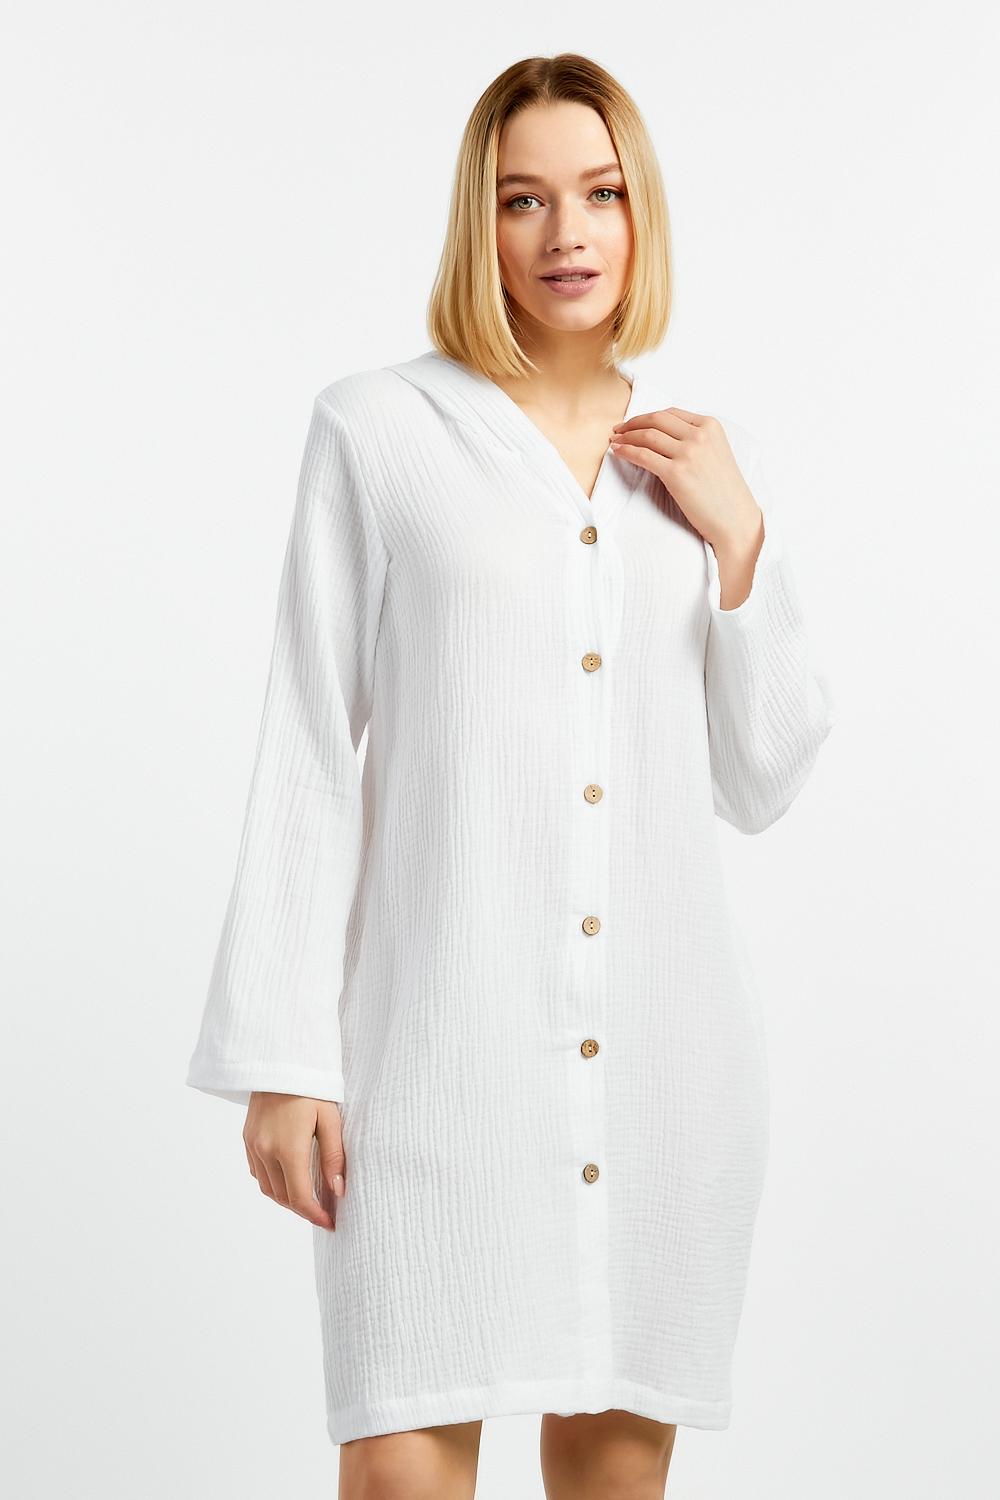 Платье женское LikaDress 18-1689 белое 44 RU